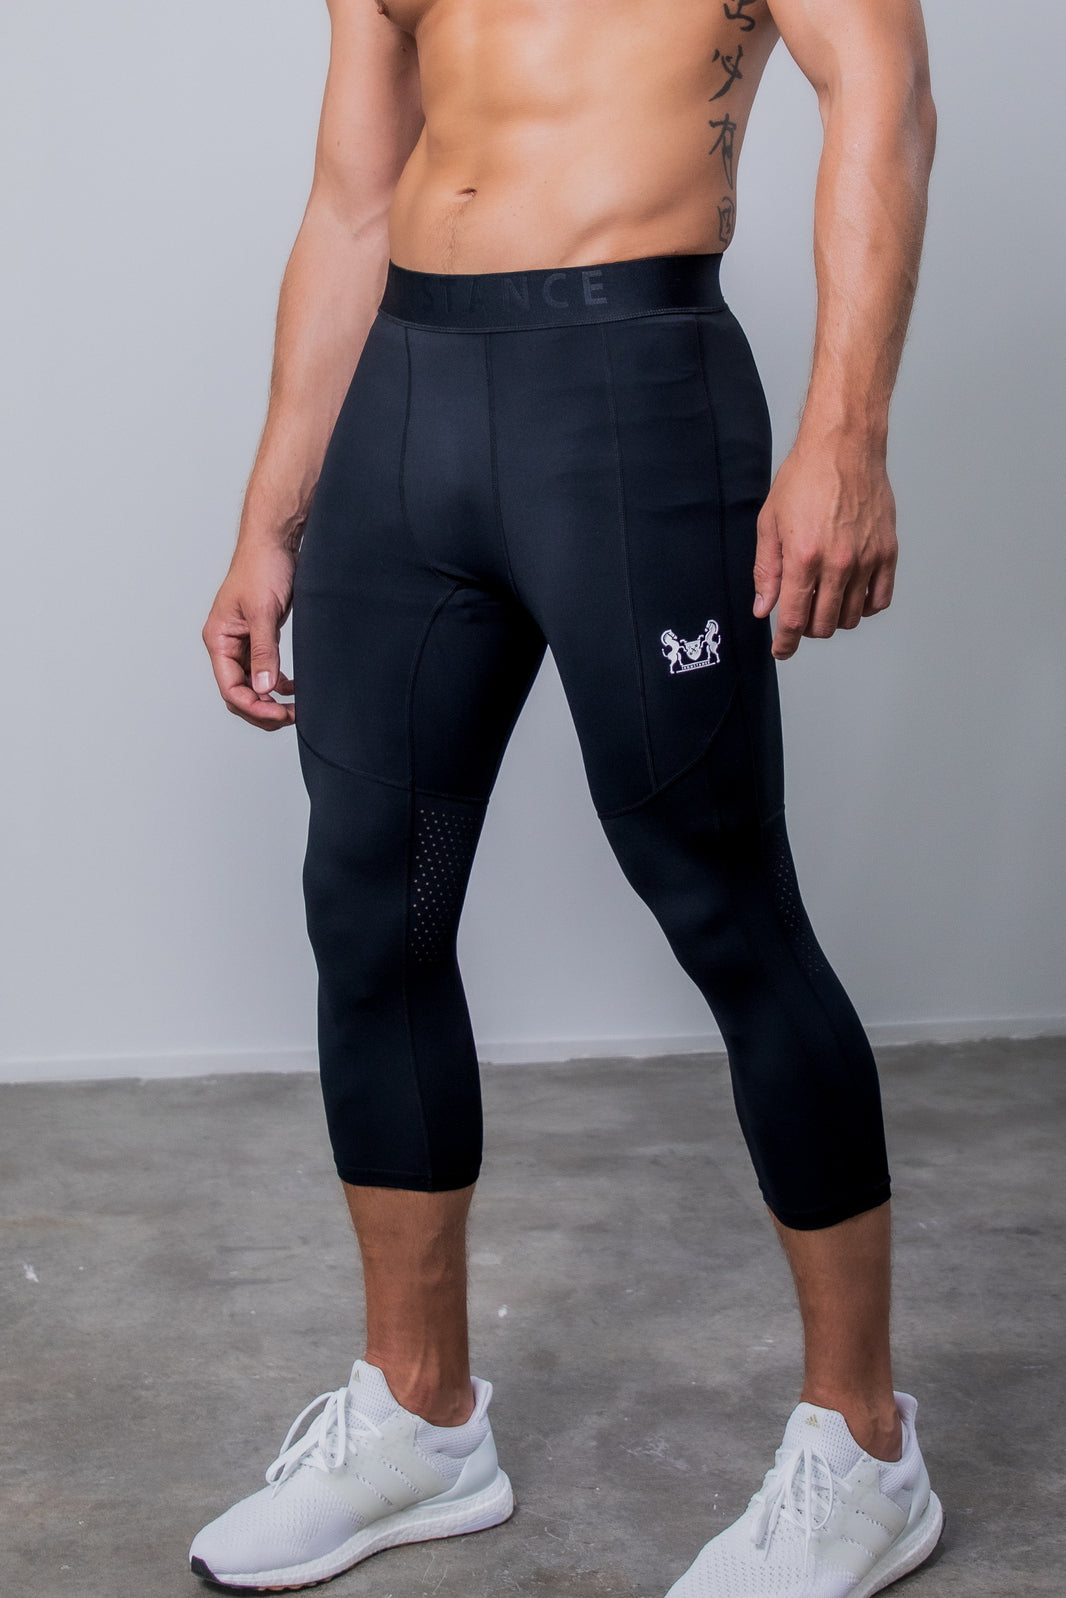 Women's Sports Fitness Leggings - Second Skin Galis - Online Sale